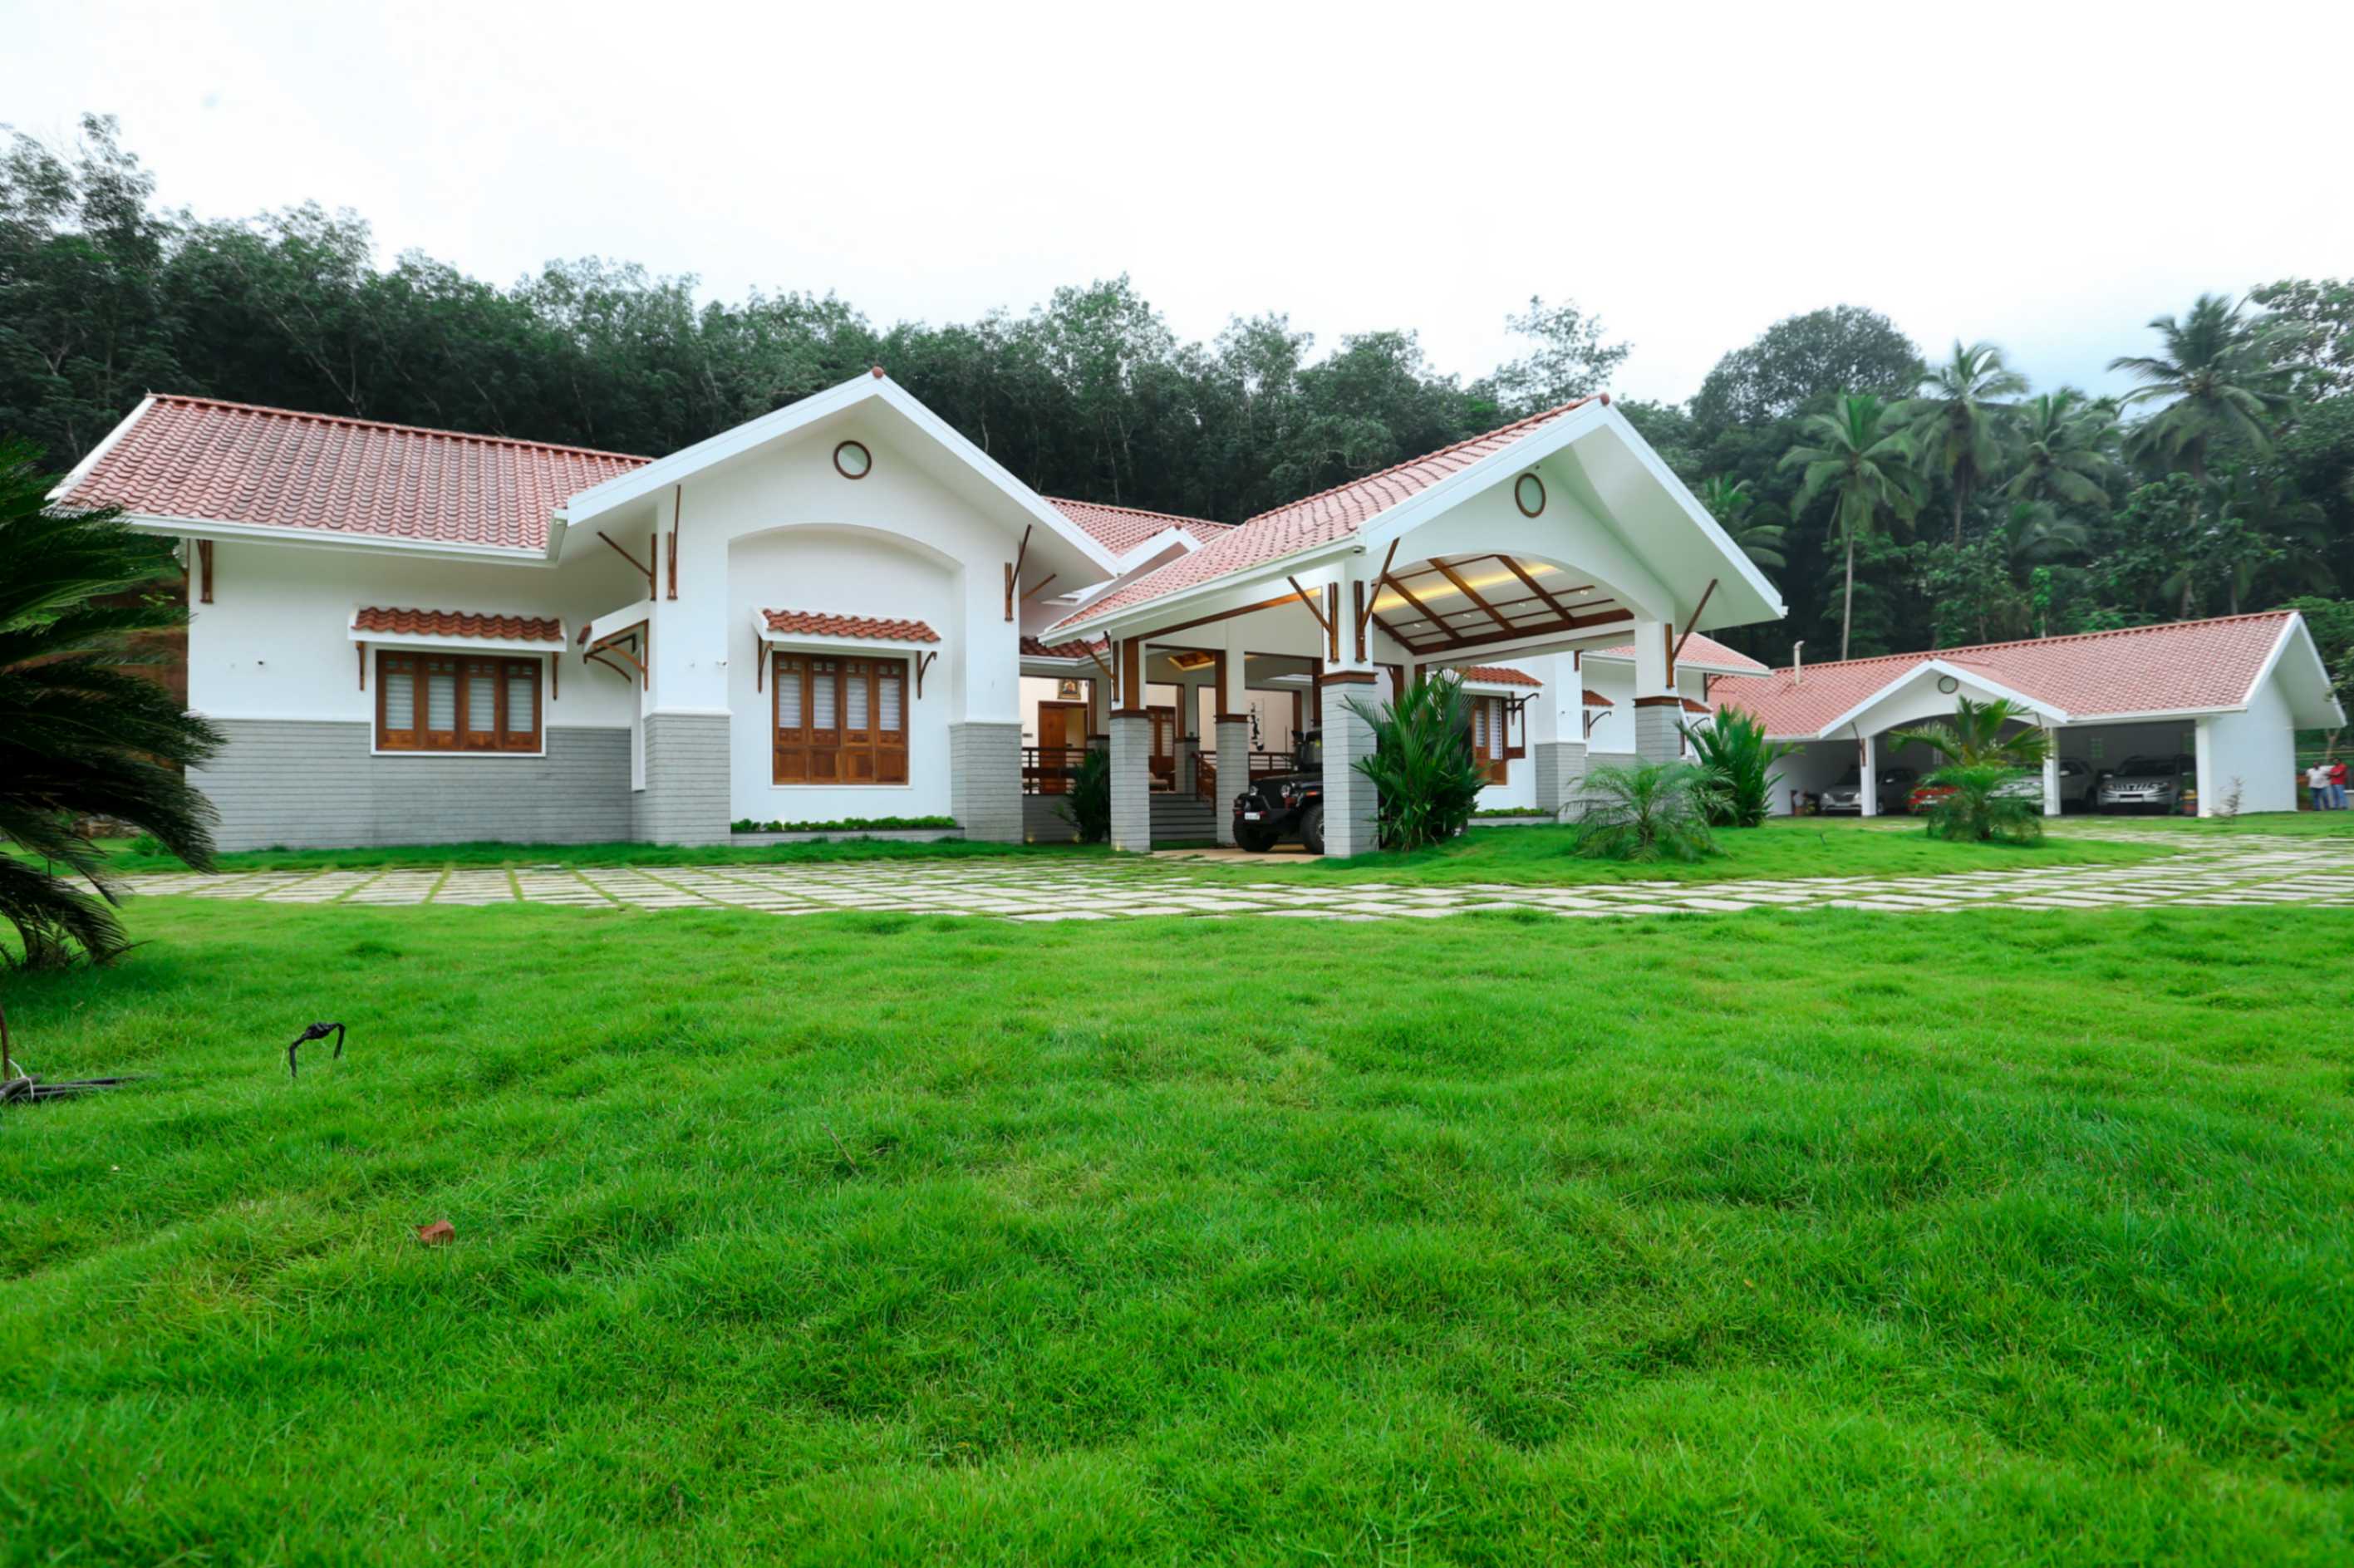 Residence for Mr Joy Mathew at Koorachundu